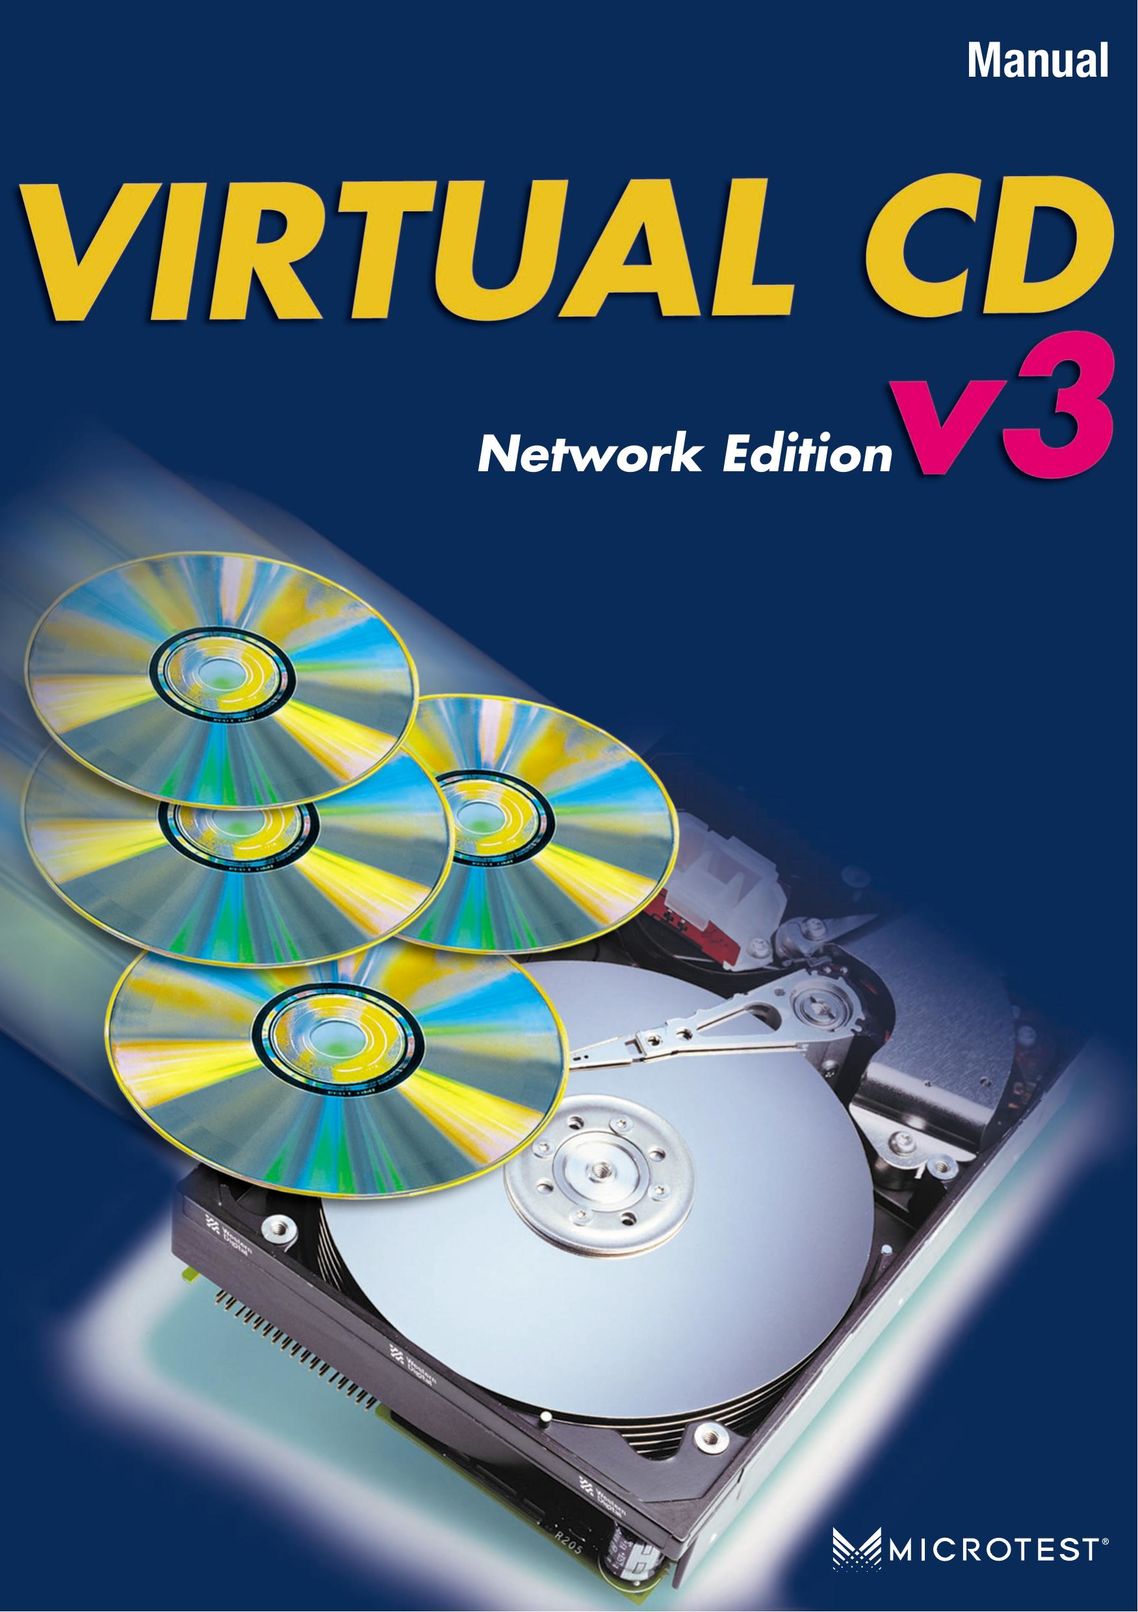 Microtest VIRTUAL CD v3 CD Player User Manual